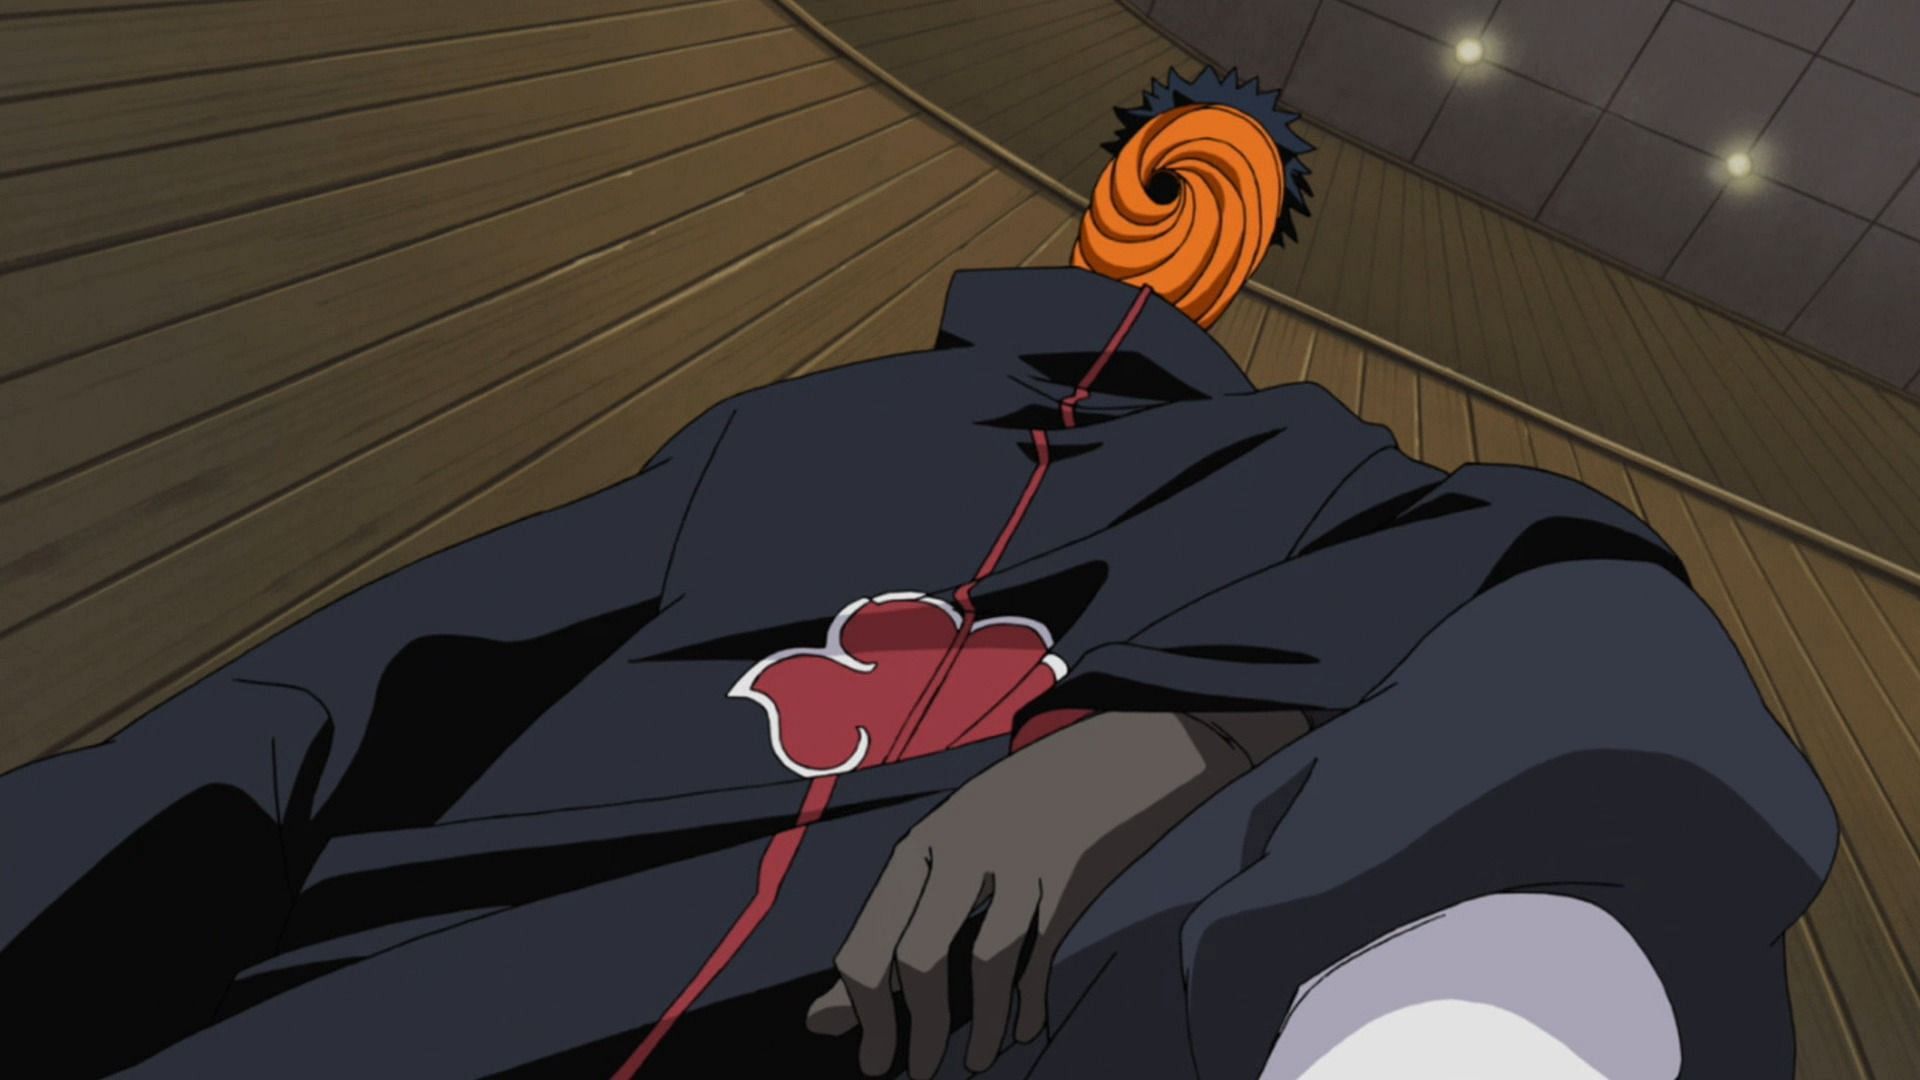 Obito Uchiha as seen in the Naruto: Shippuden anime (Image via Studio Pierrot)